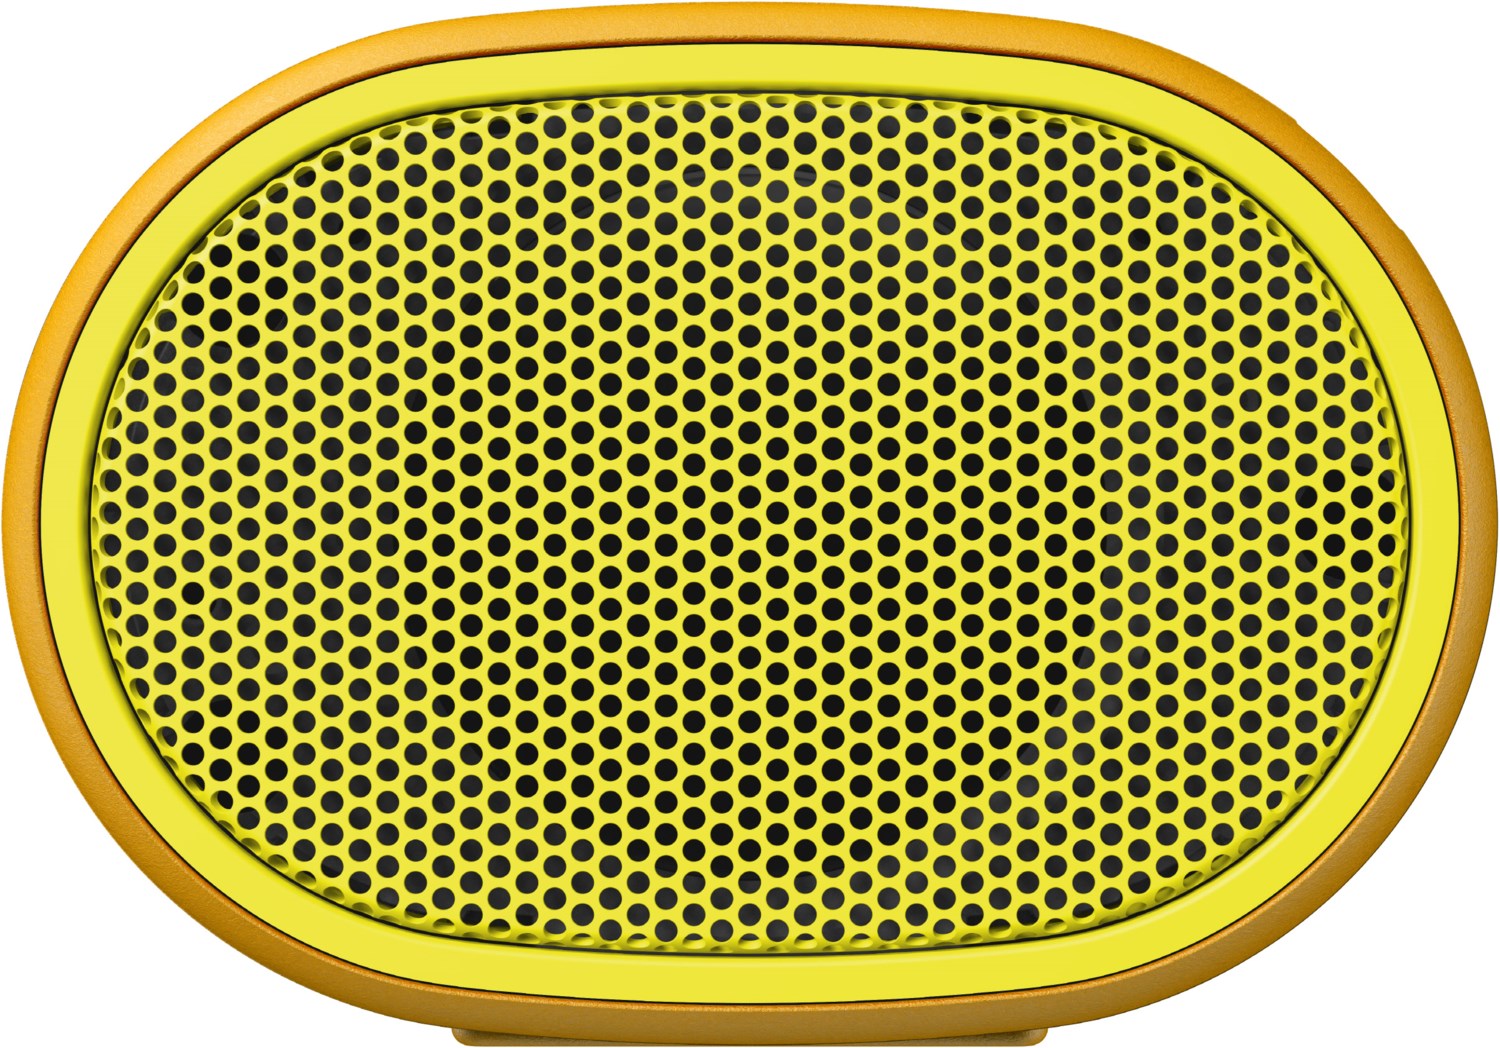 SRS-XB01 Multimedia-Lautsprecher gelb